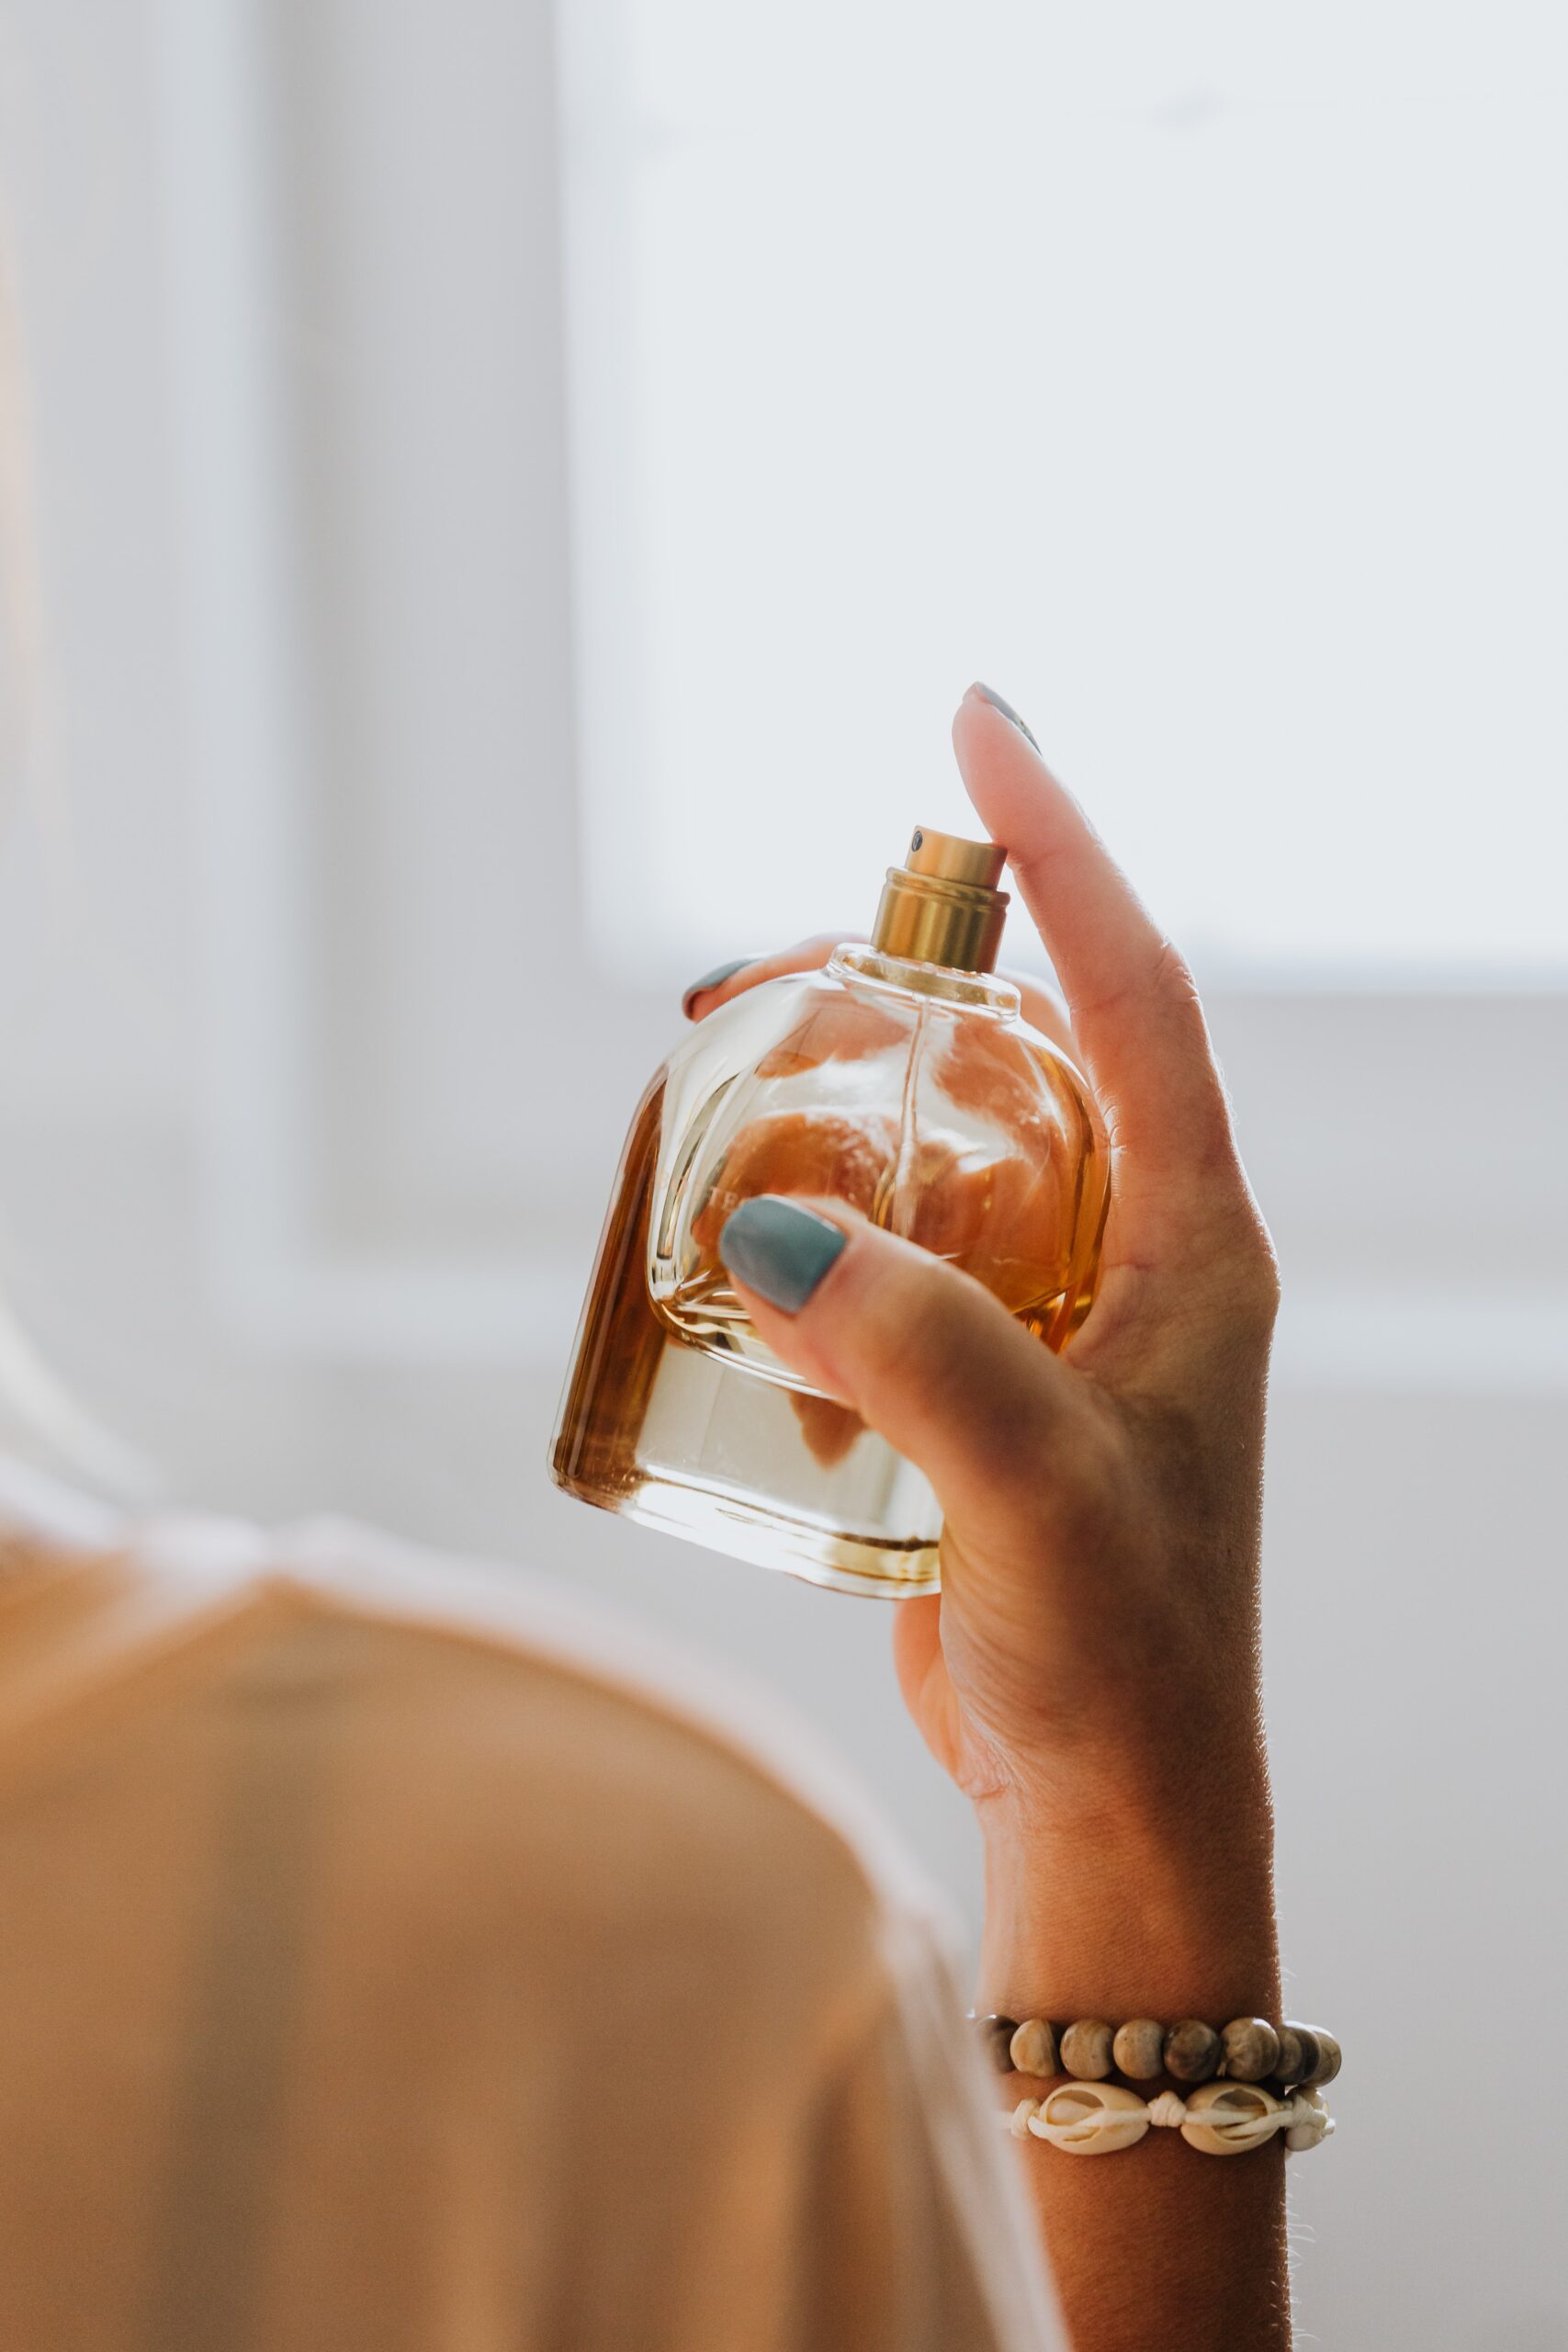 Model spraying bottle of perfume on herself.